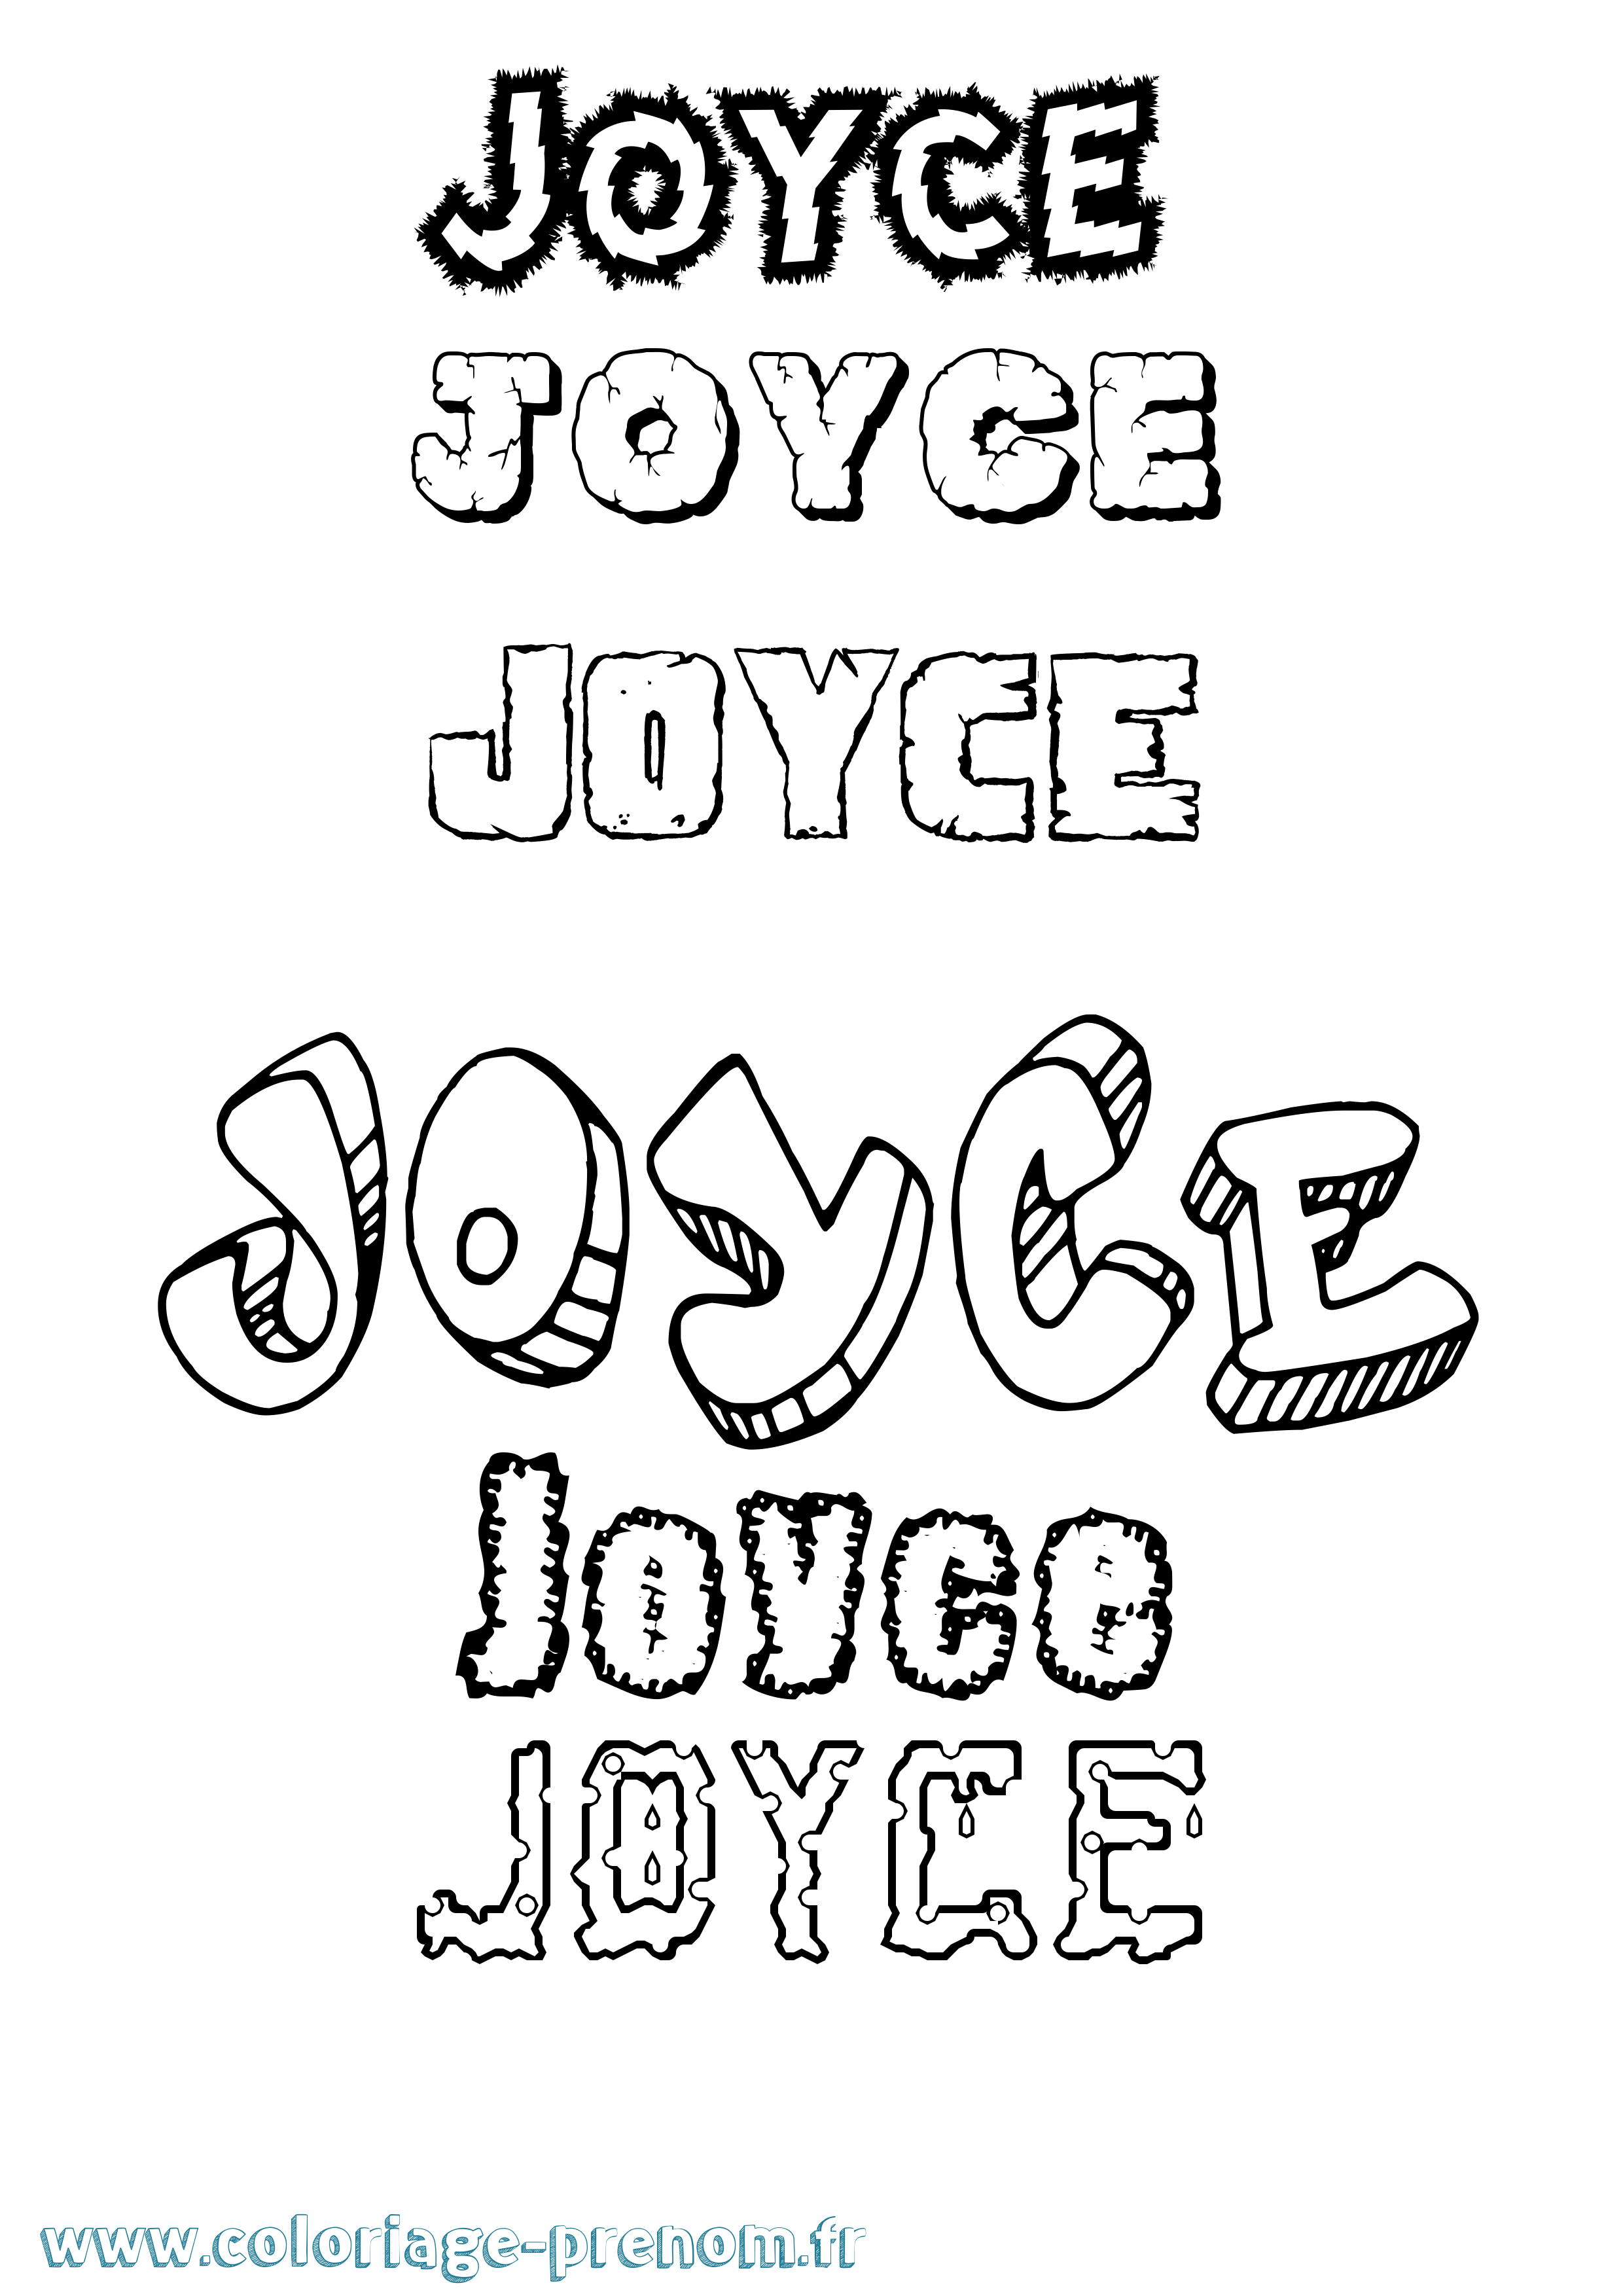 Coloriage prénom Joyce